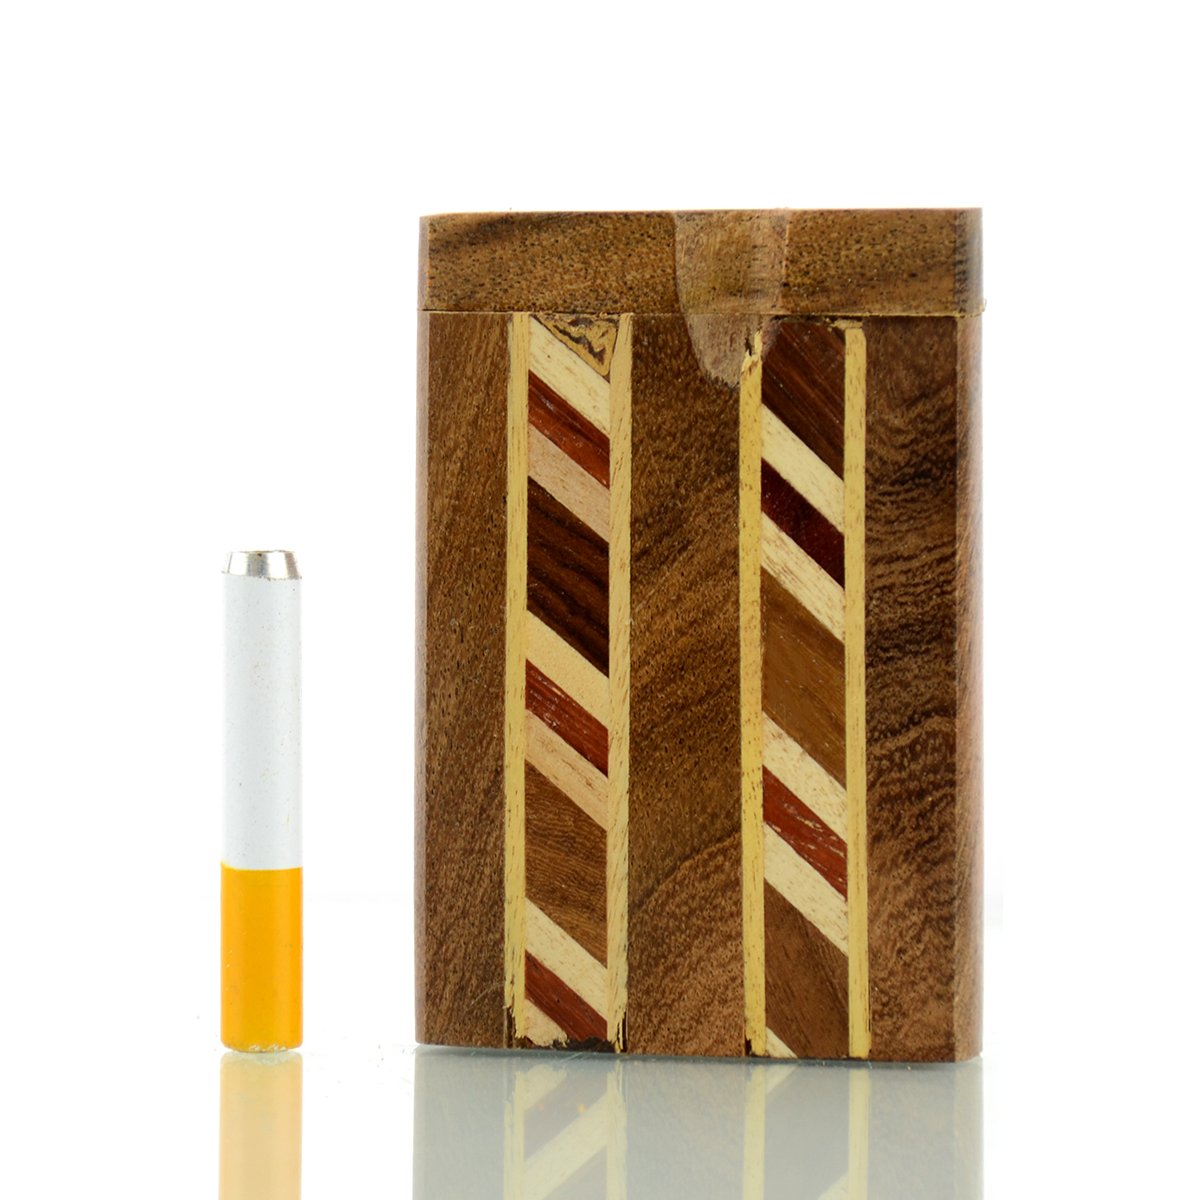 3" Handmade Wooden Track Pattern Design Dugout Art with 2" Metal Cigarette